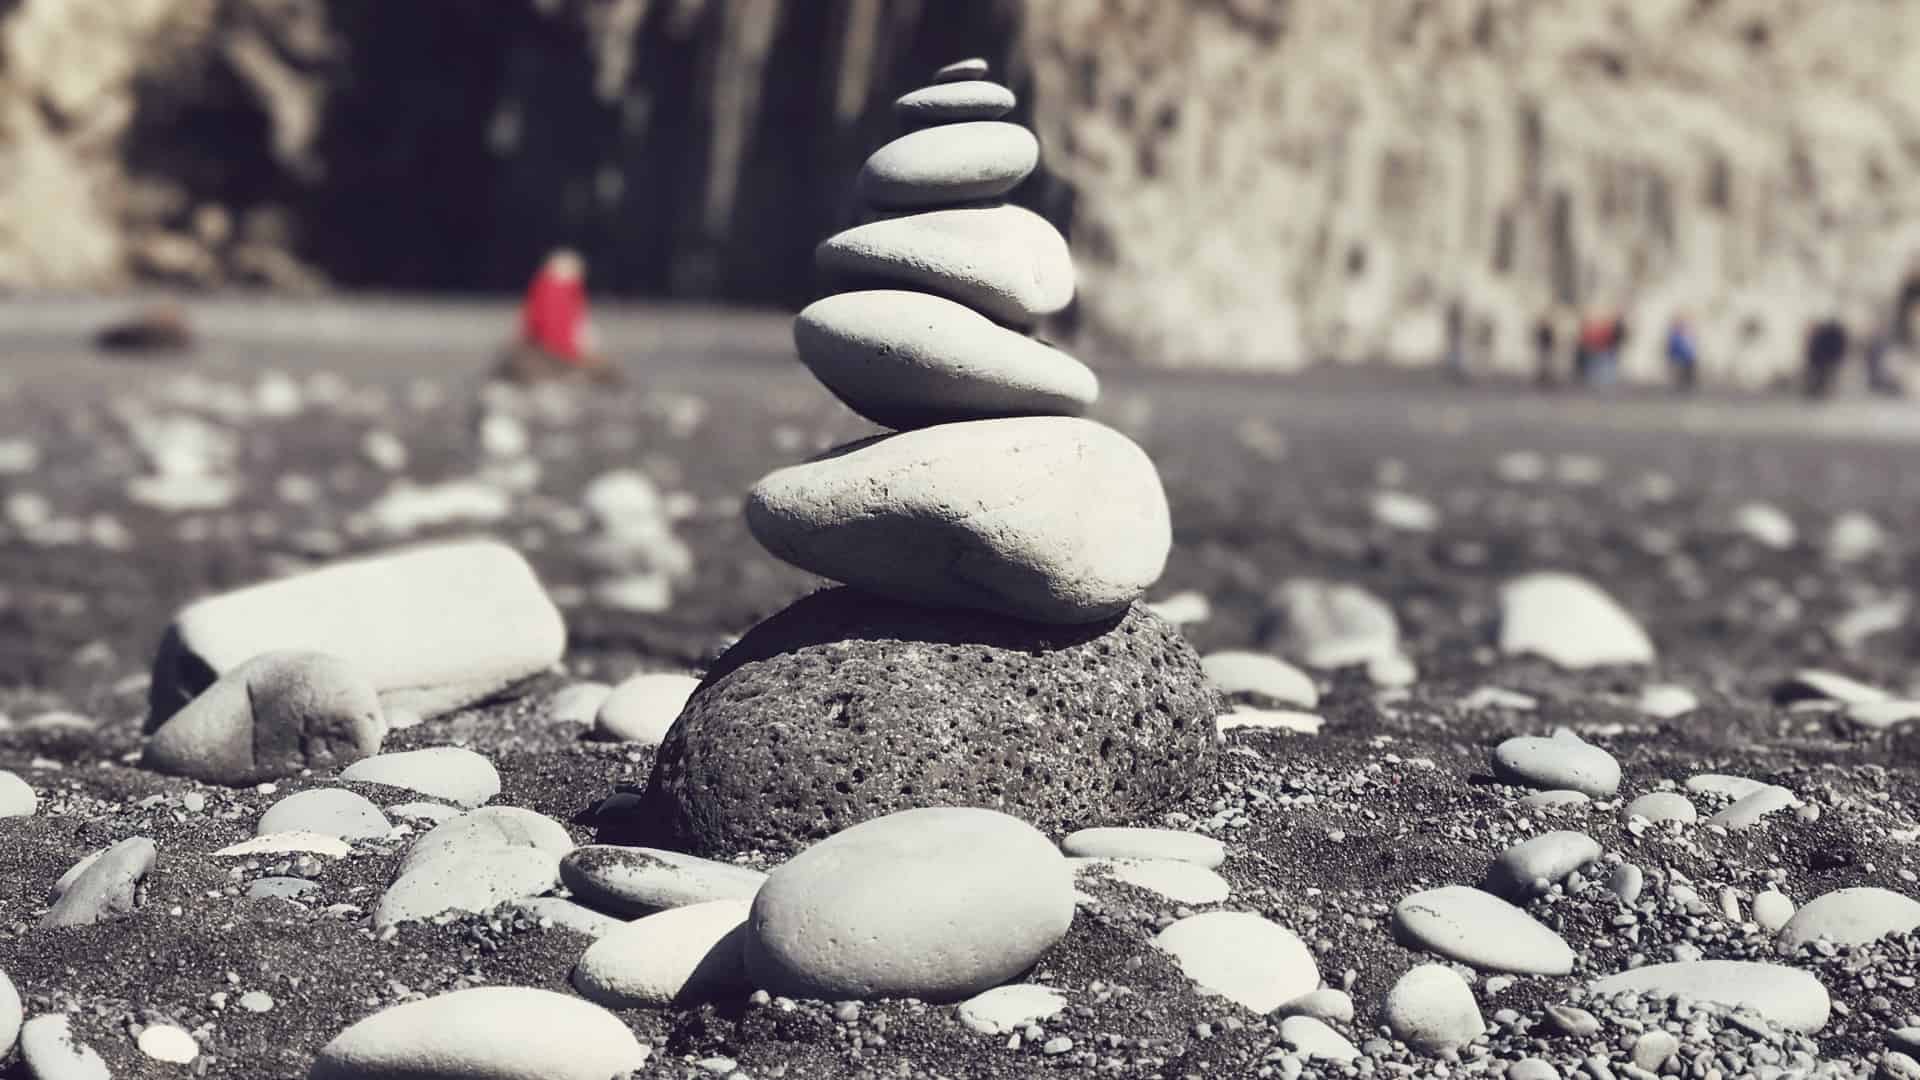 Stacked rocks symbolizing patience